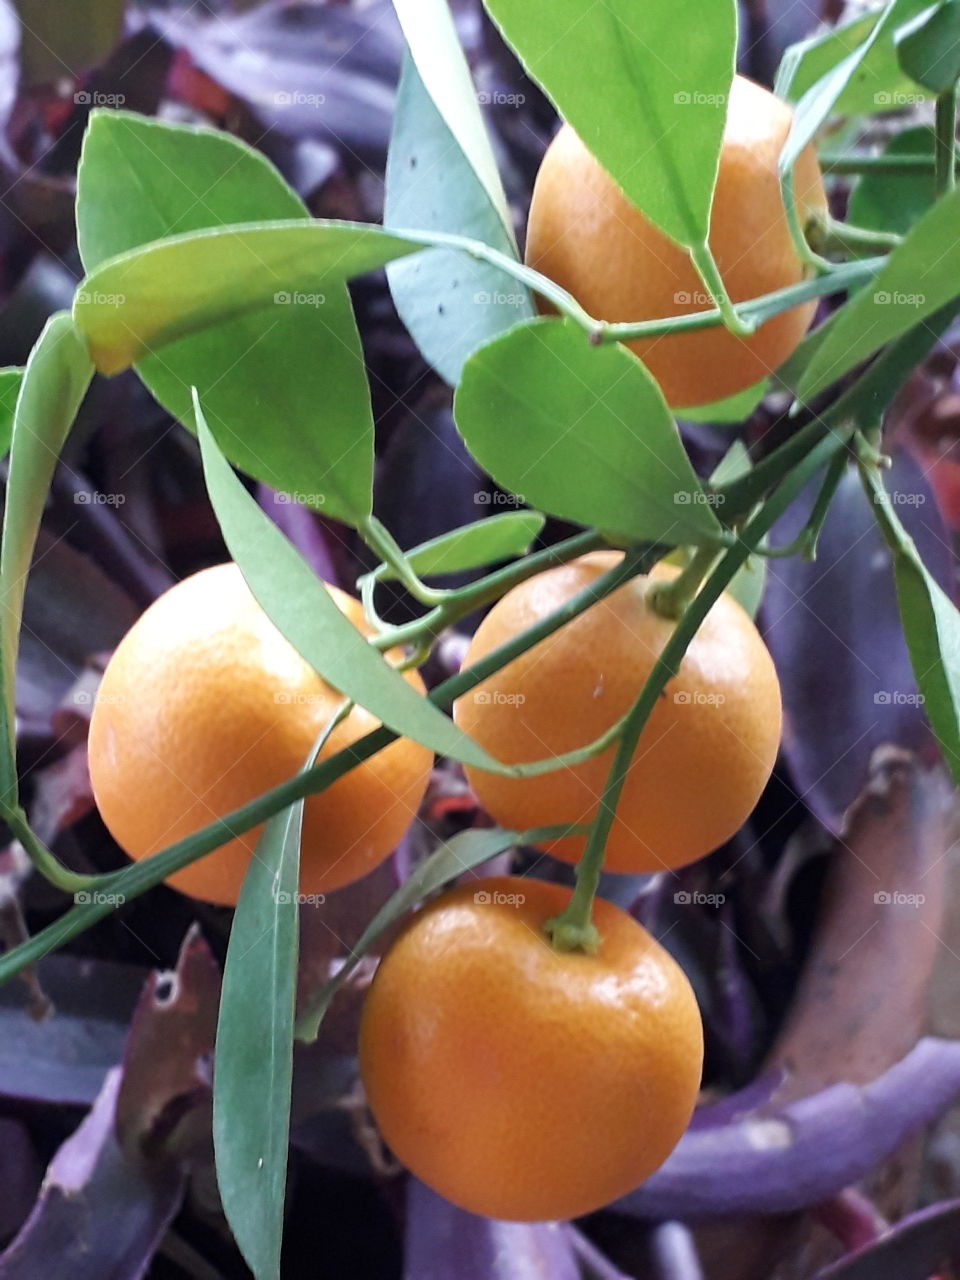 winter garden  - some citrus with orange fruits